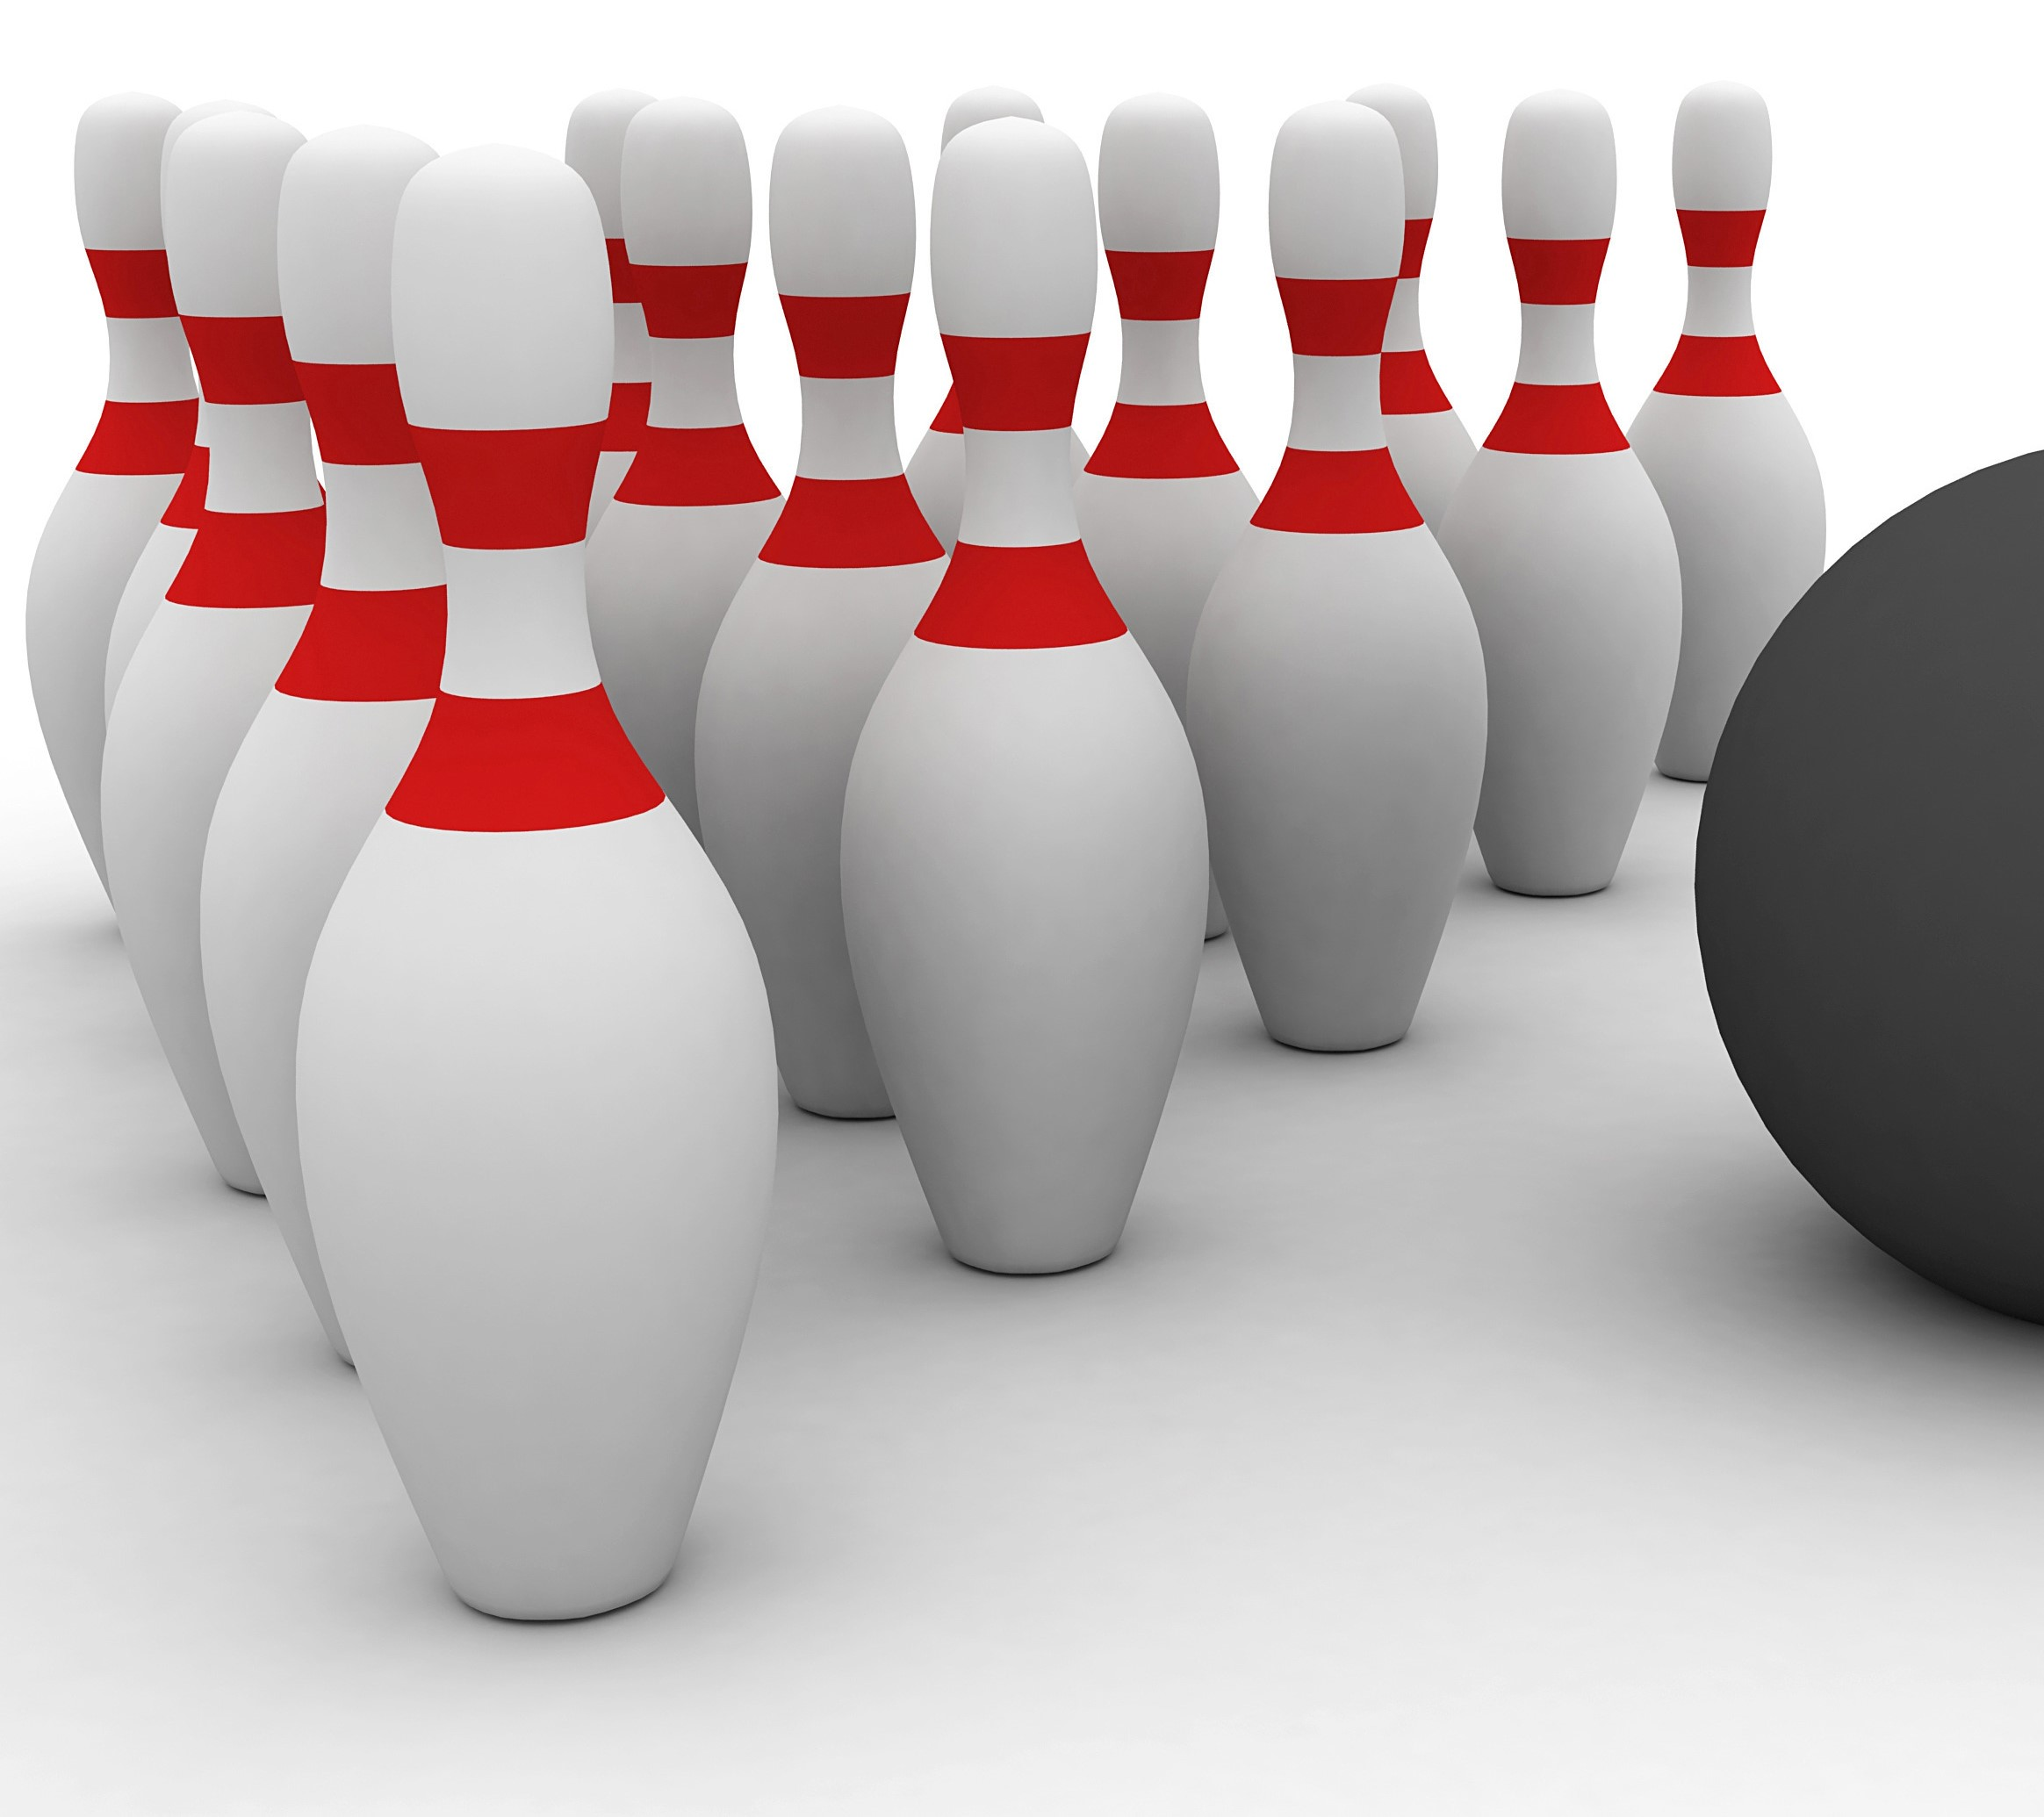 uploads/slider/20150923/bowling-with-ball_zyj4vI_u.jpg